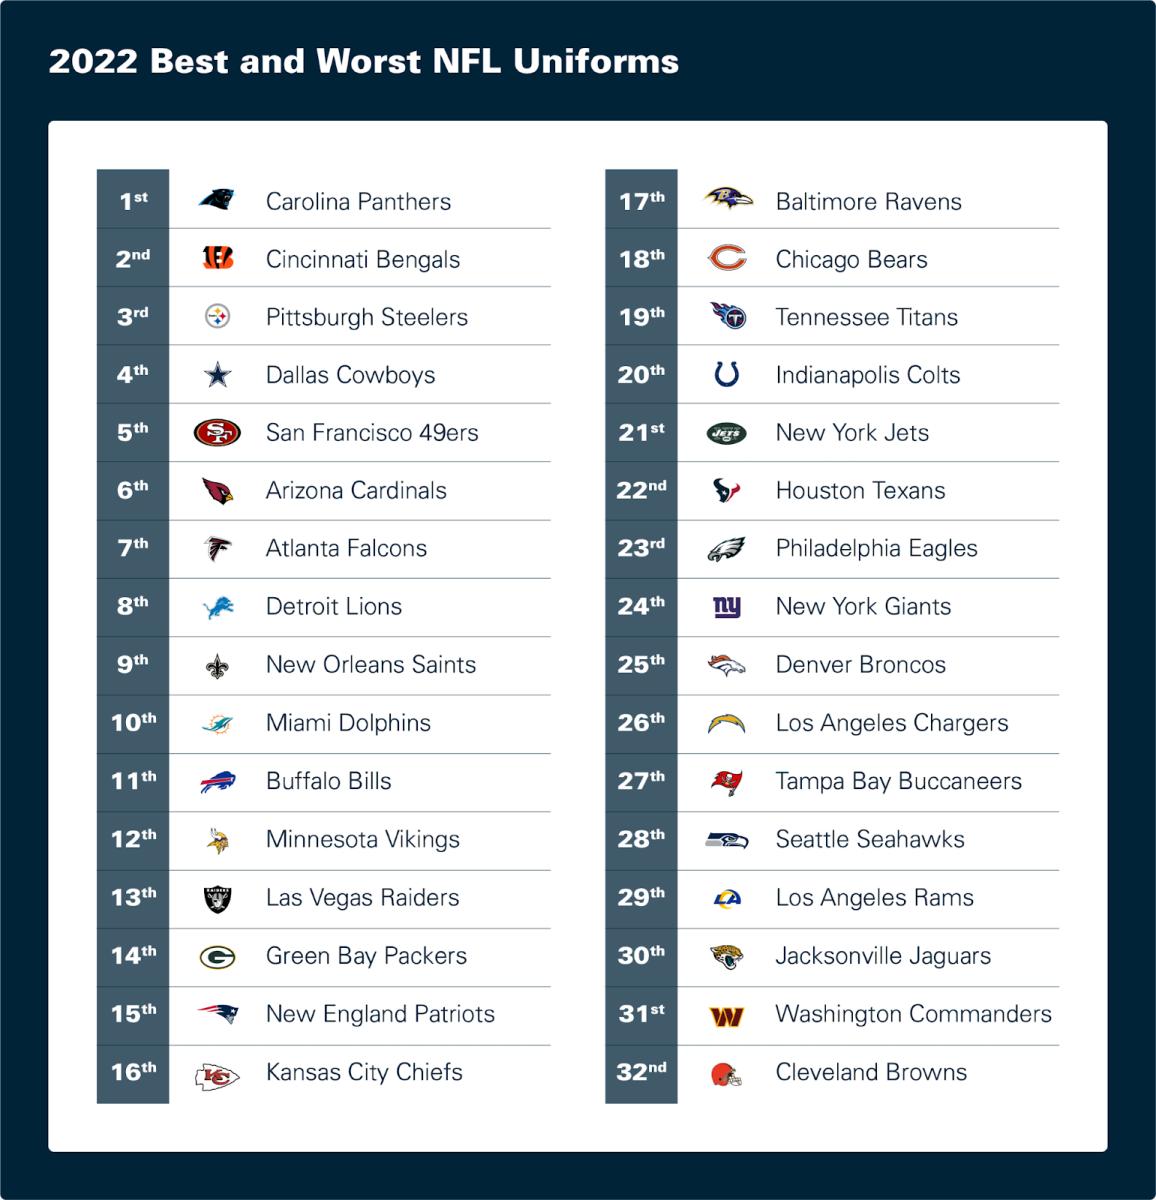 Atlanta Falcons uniforms ranked